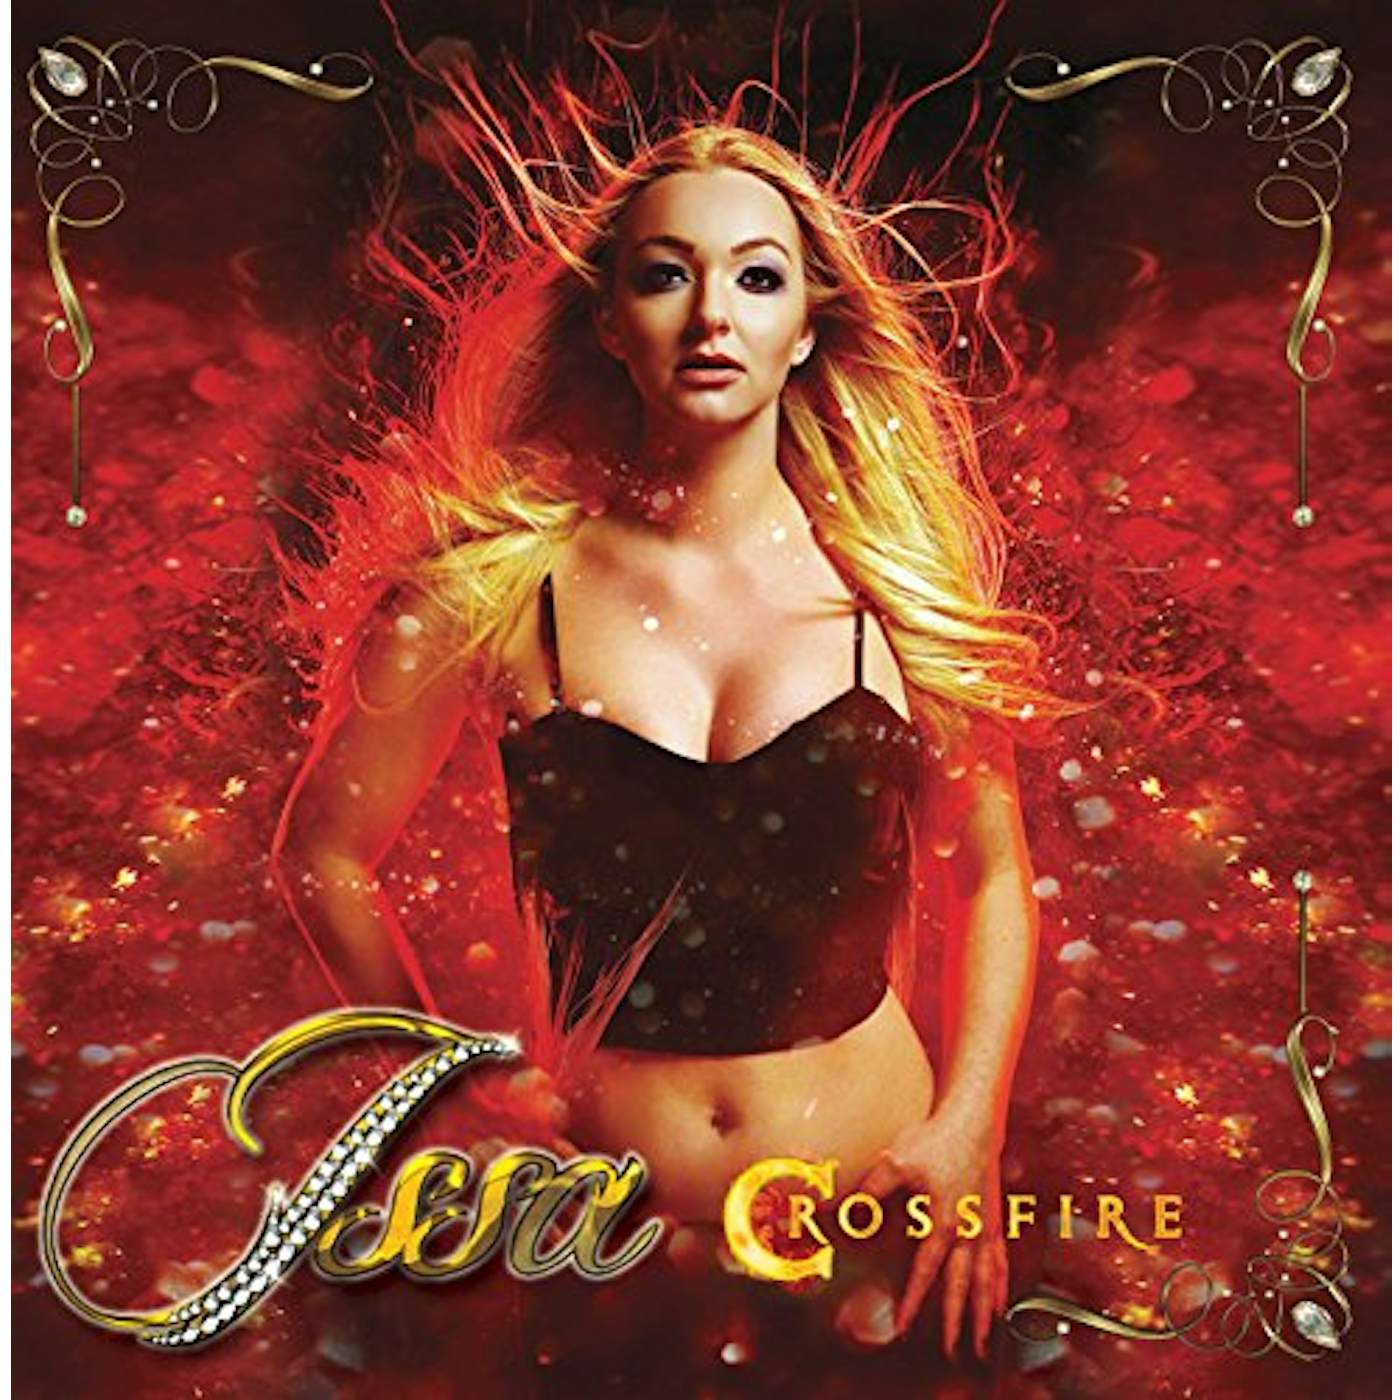 Issa CROSSFIRE CD